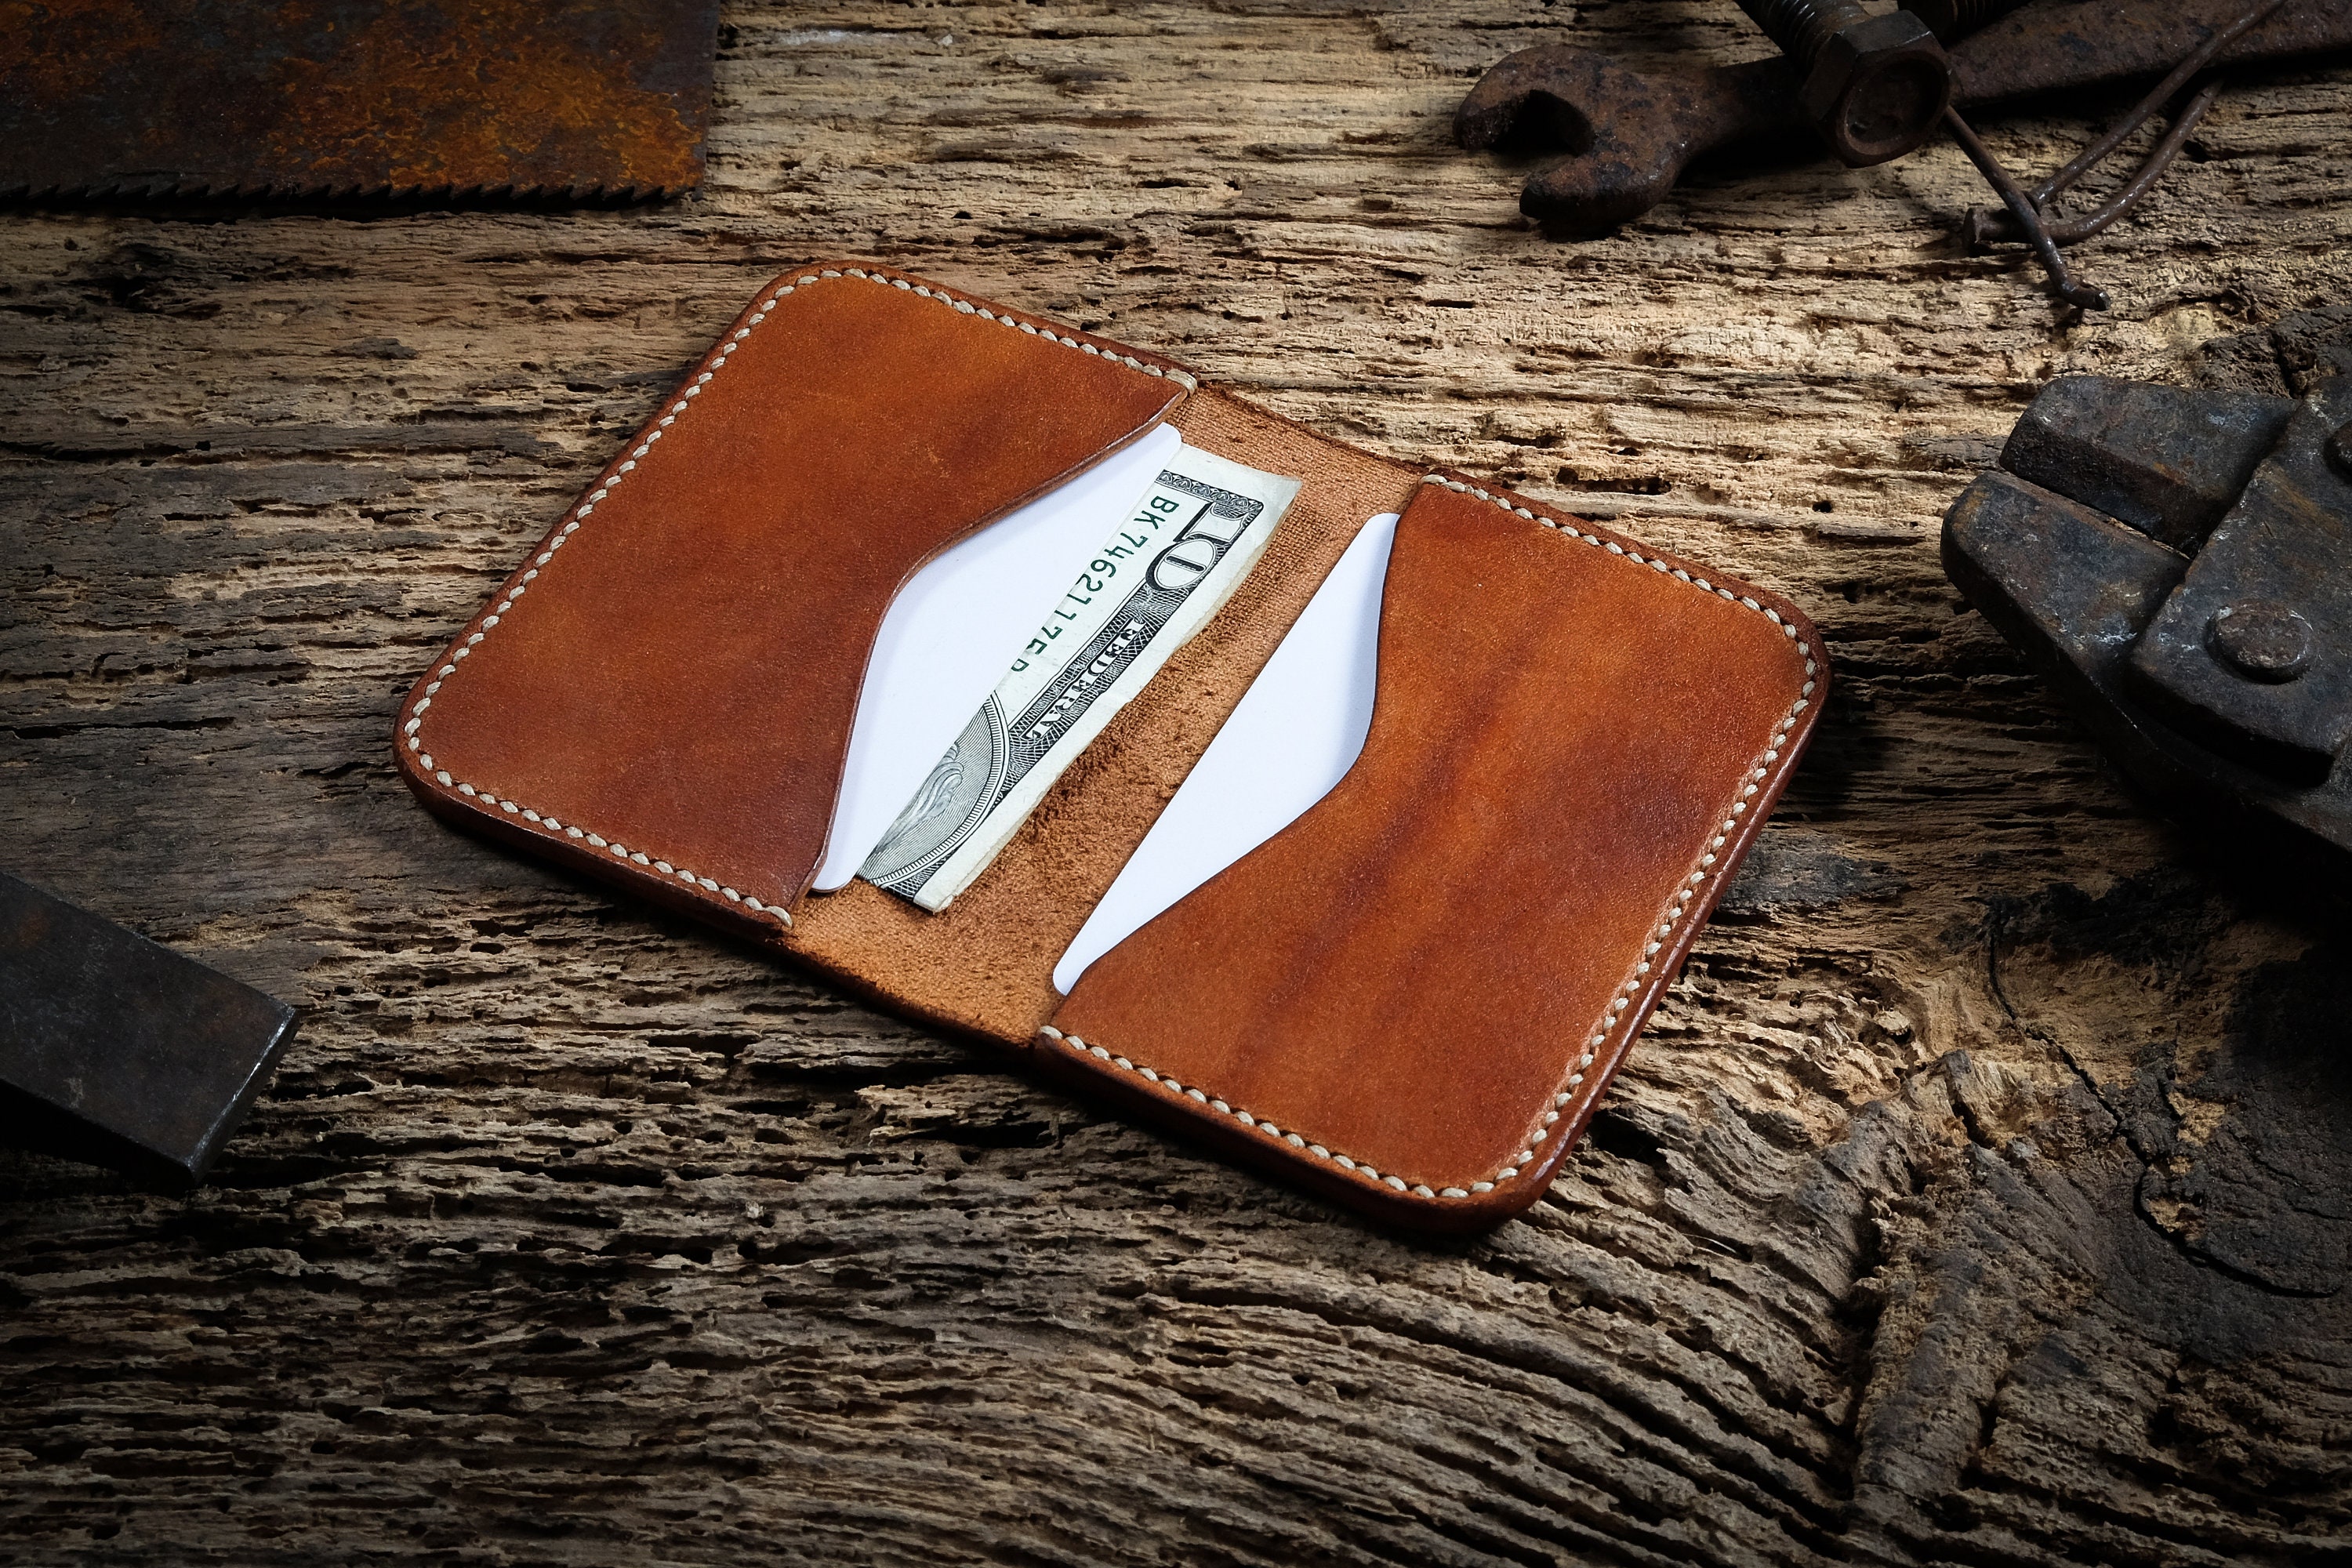 Kroo Multi Card Minimalist Slim Bifold Leather Men Travel Wallet Pocket Holder, Best Mens Wallets for Cash Money, ID, Credit Cards, Men's, Gray